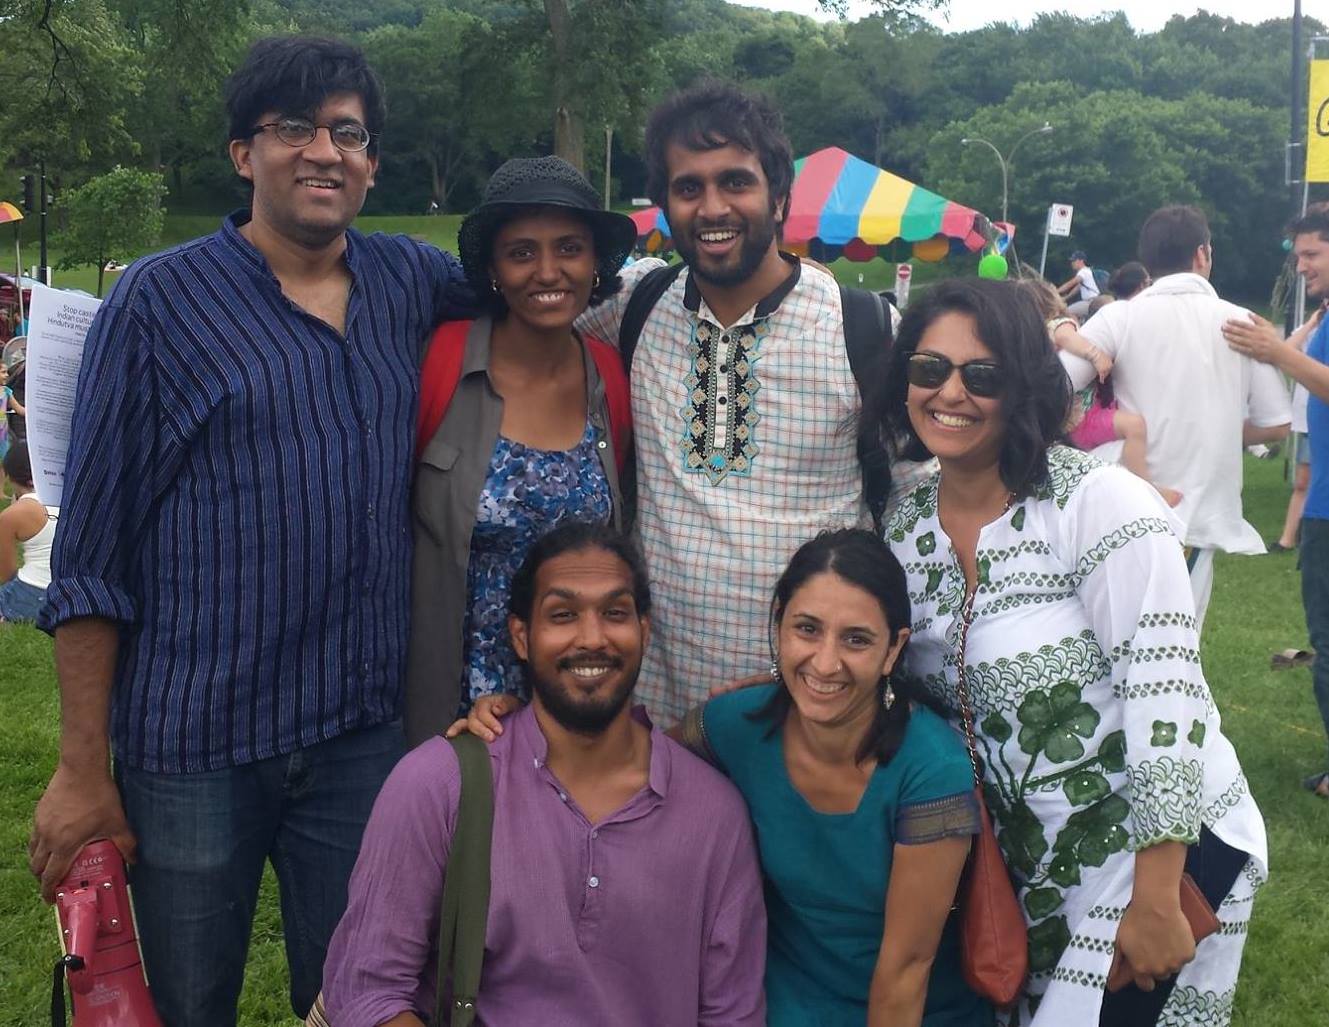 Report-back from Garam Masala anti-caste, anti-Hindutva disruption at Montreal's "Festival of India"